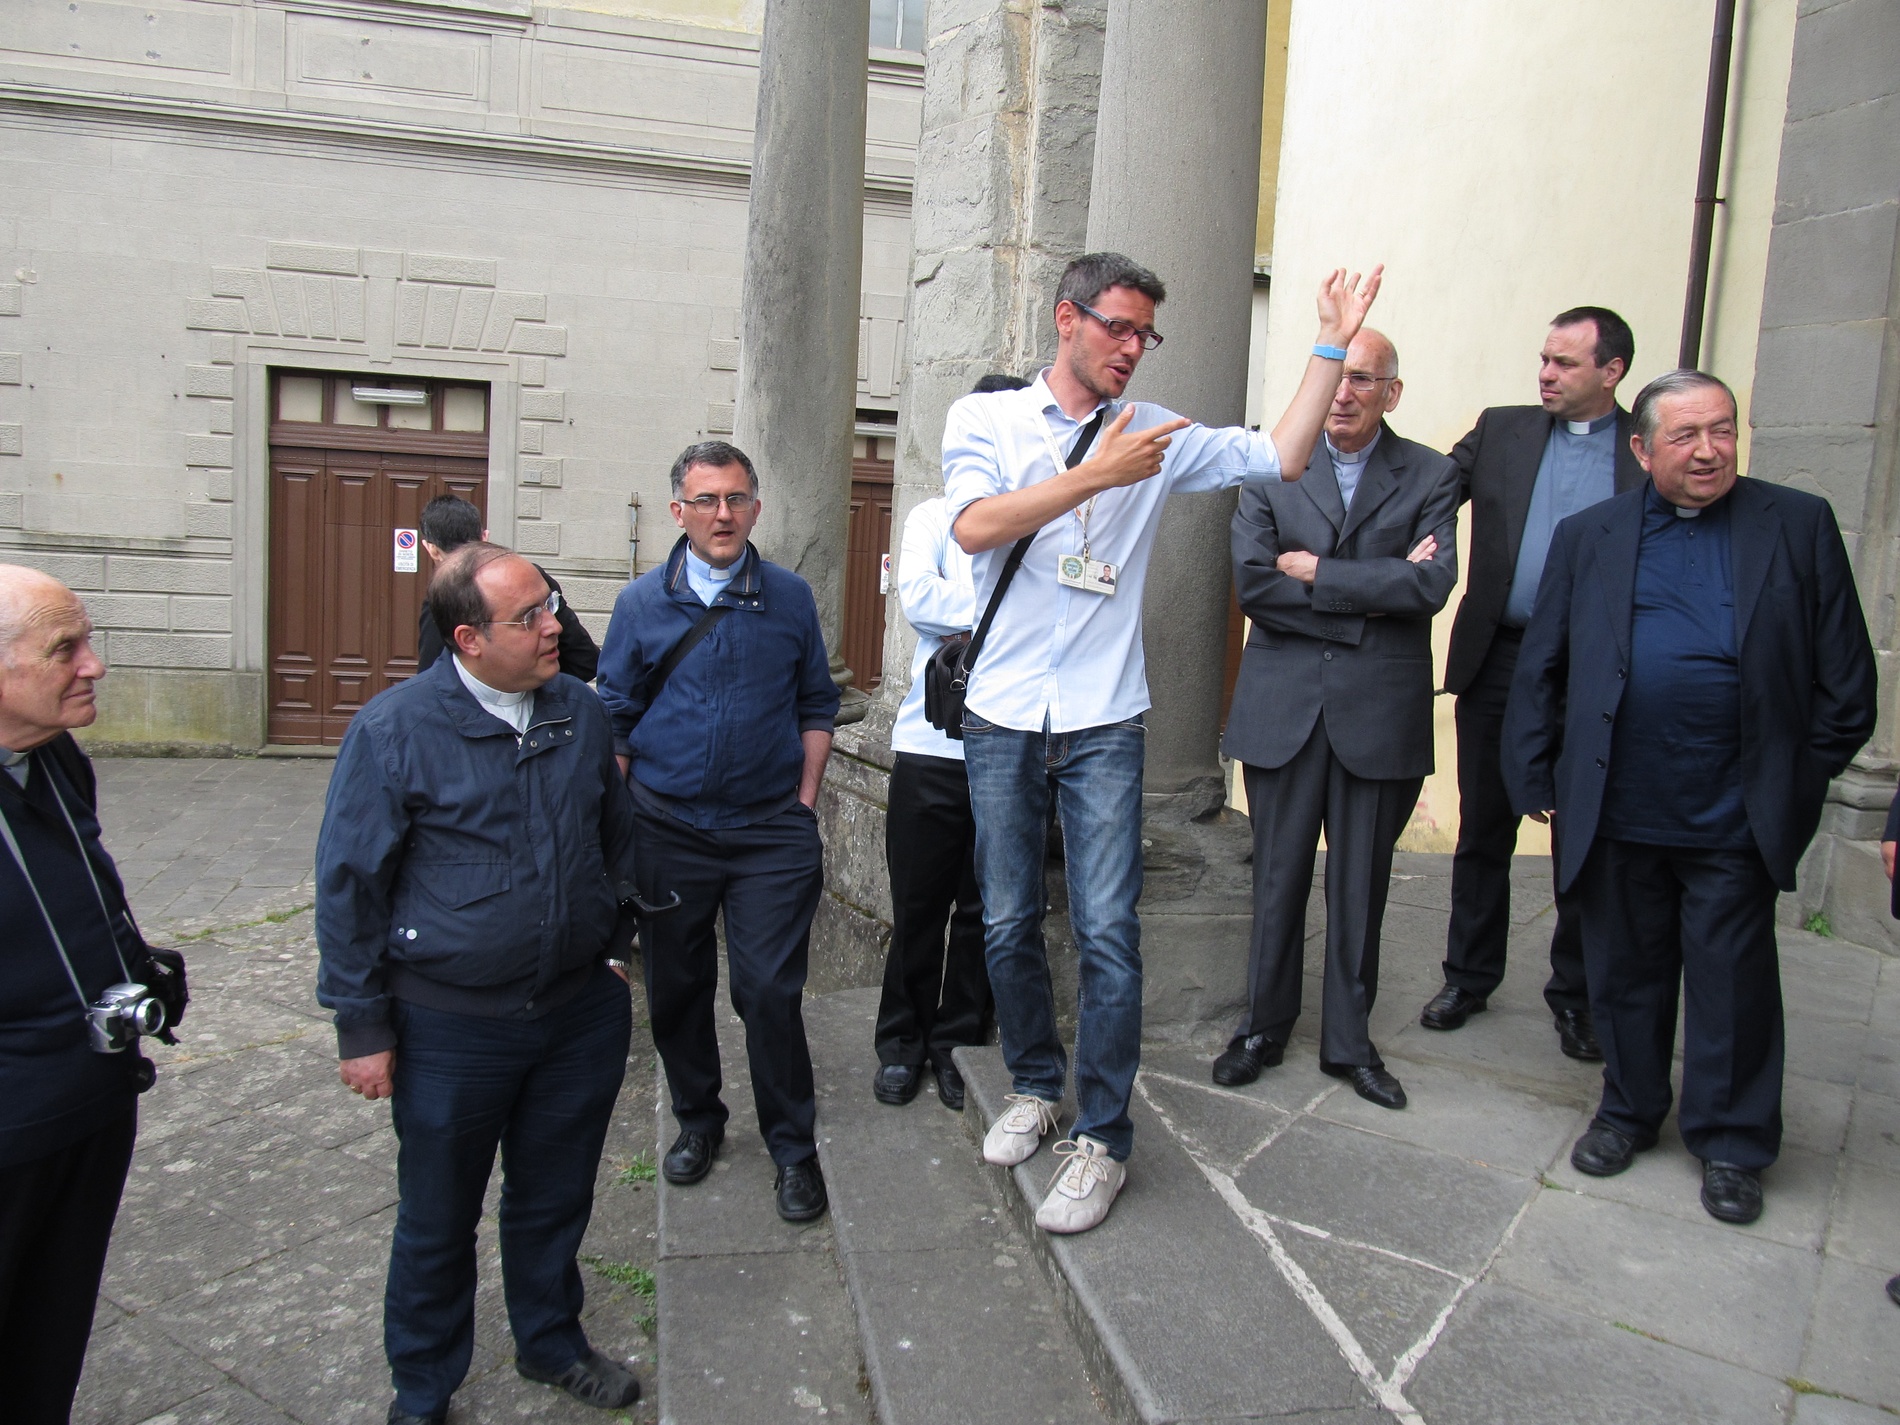 gita-clero-portovenere-lunigiana-2015-06-09-10-08-18